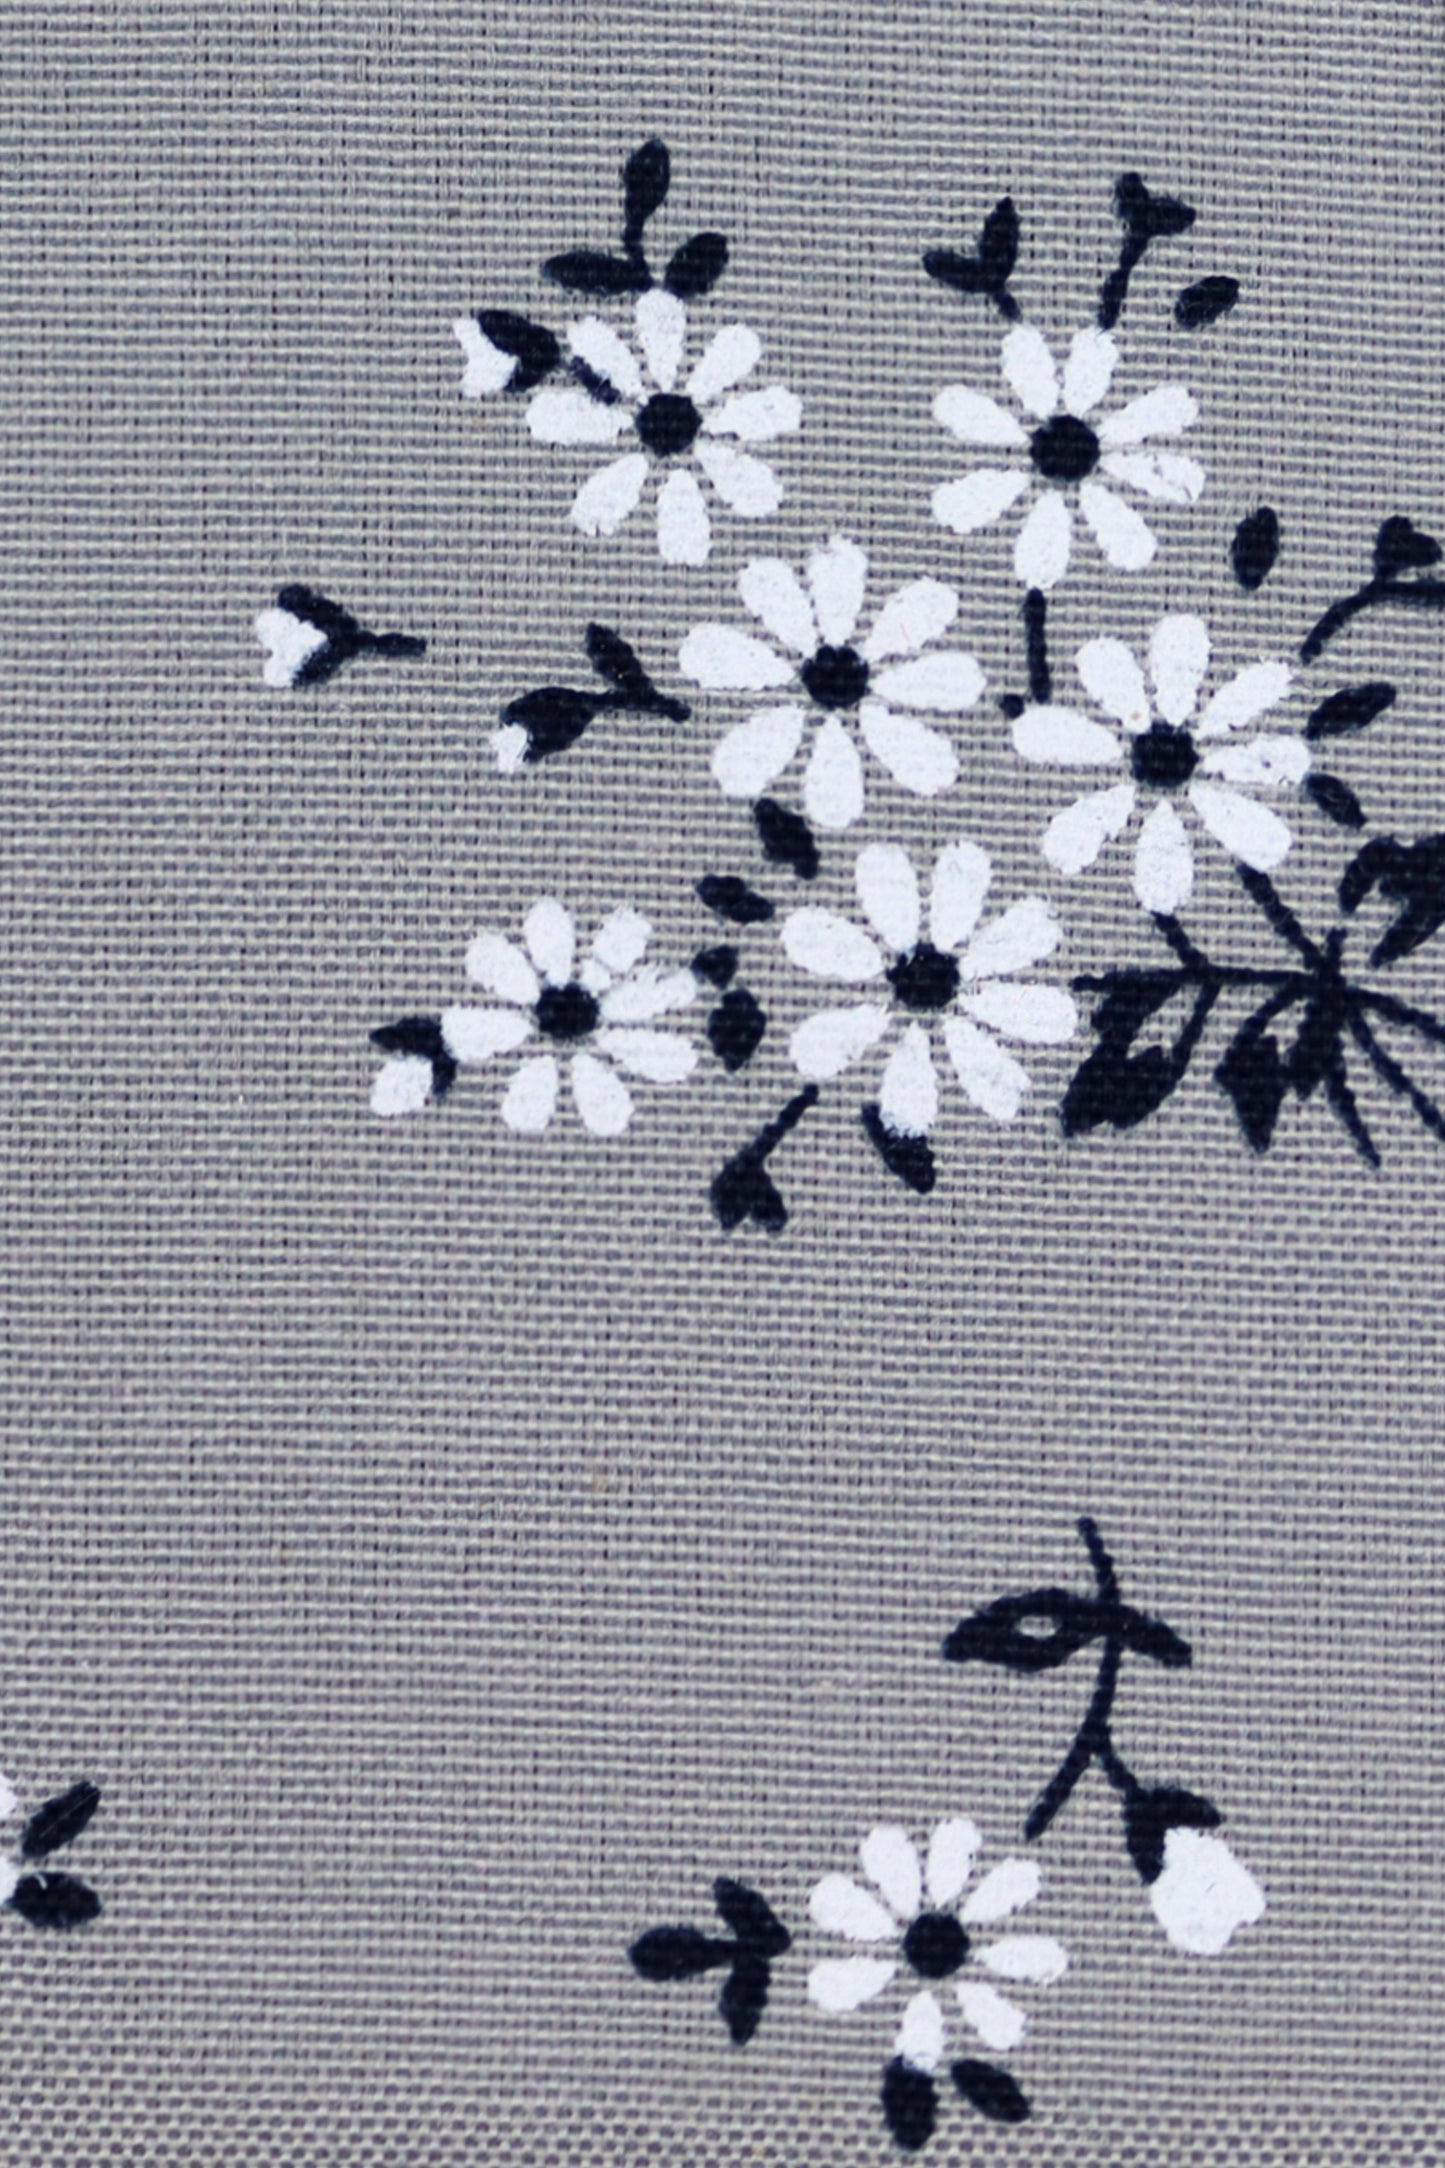 100% Cotton Floral Print Pocket Square - Grey & Navy